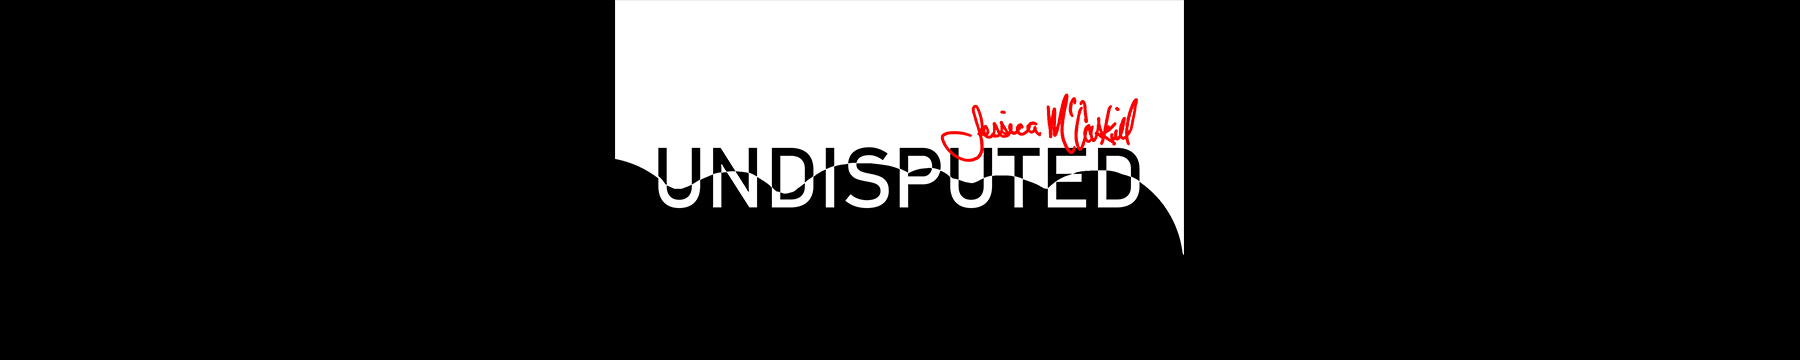 Jessica McCaskill: Undisputed